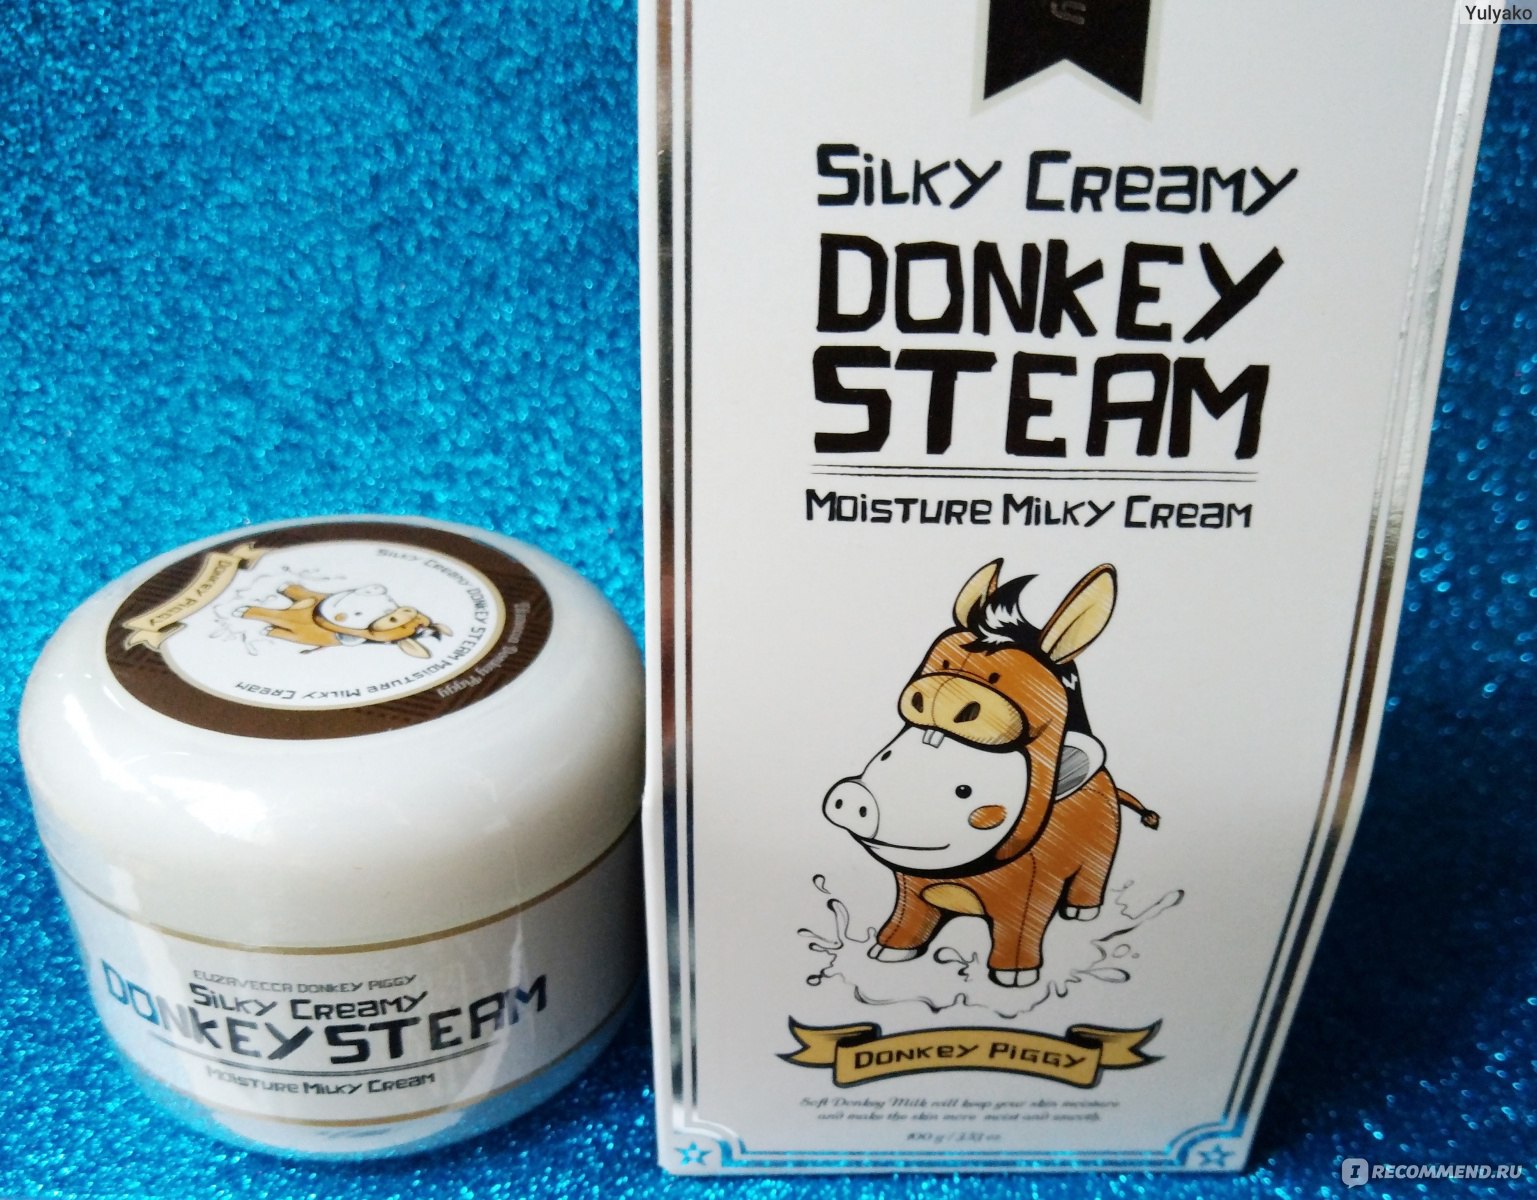 Silky cream donkey steam cream mask фото 87